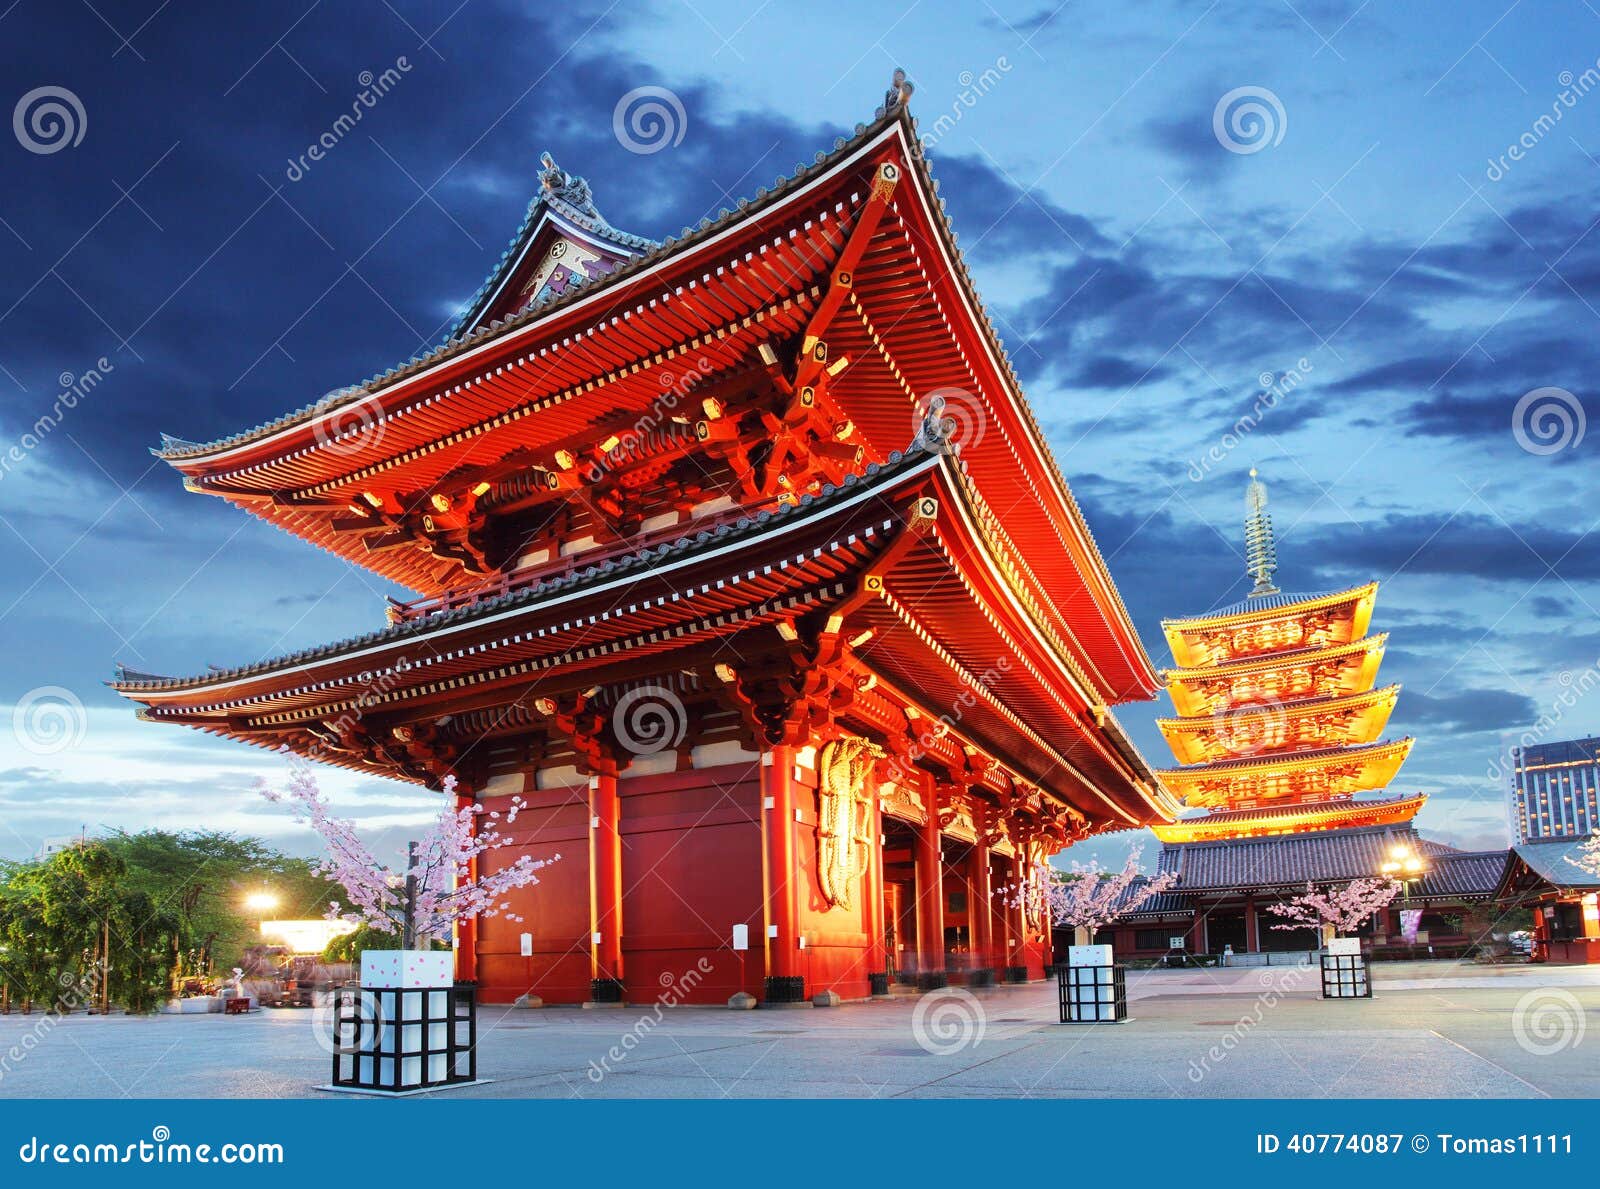 tokyo - sensoji-ji, temple in asakusa, japan